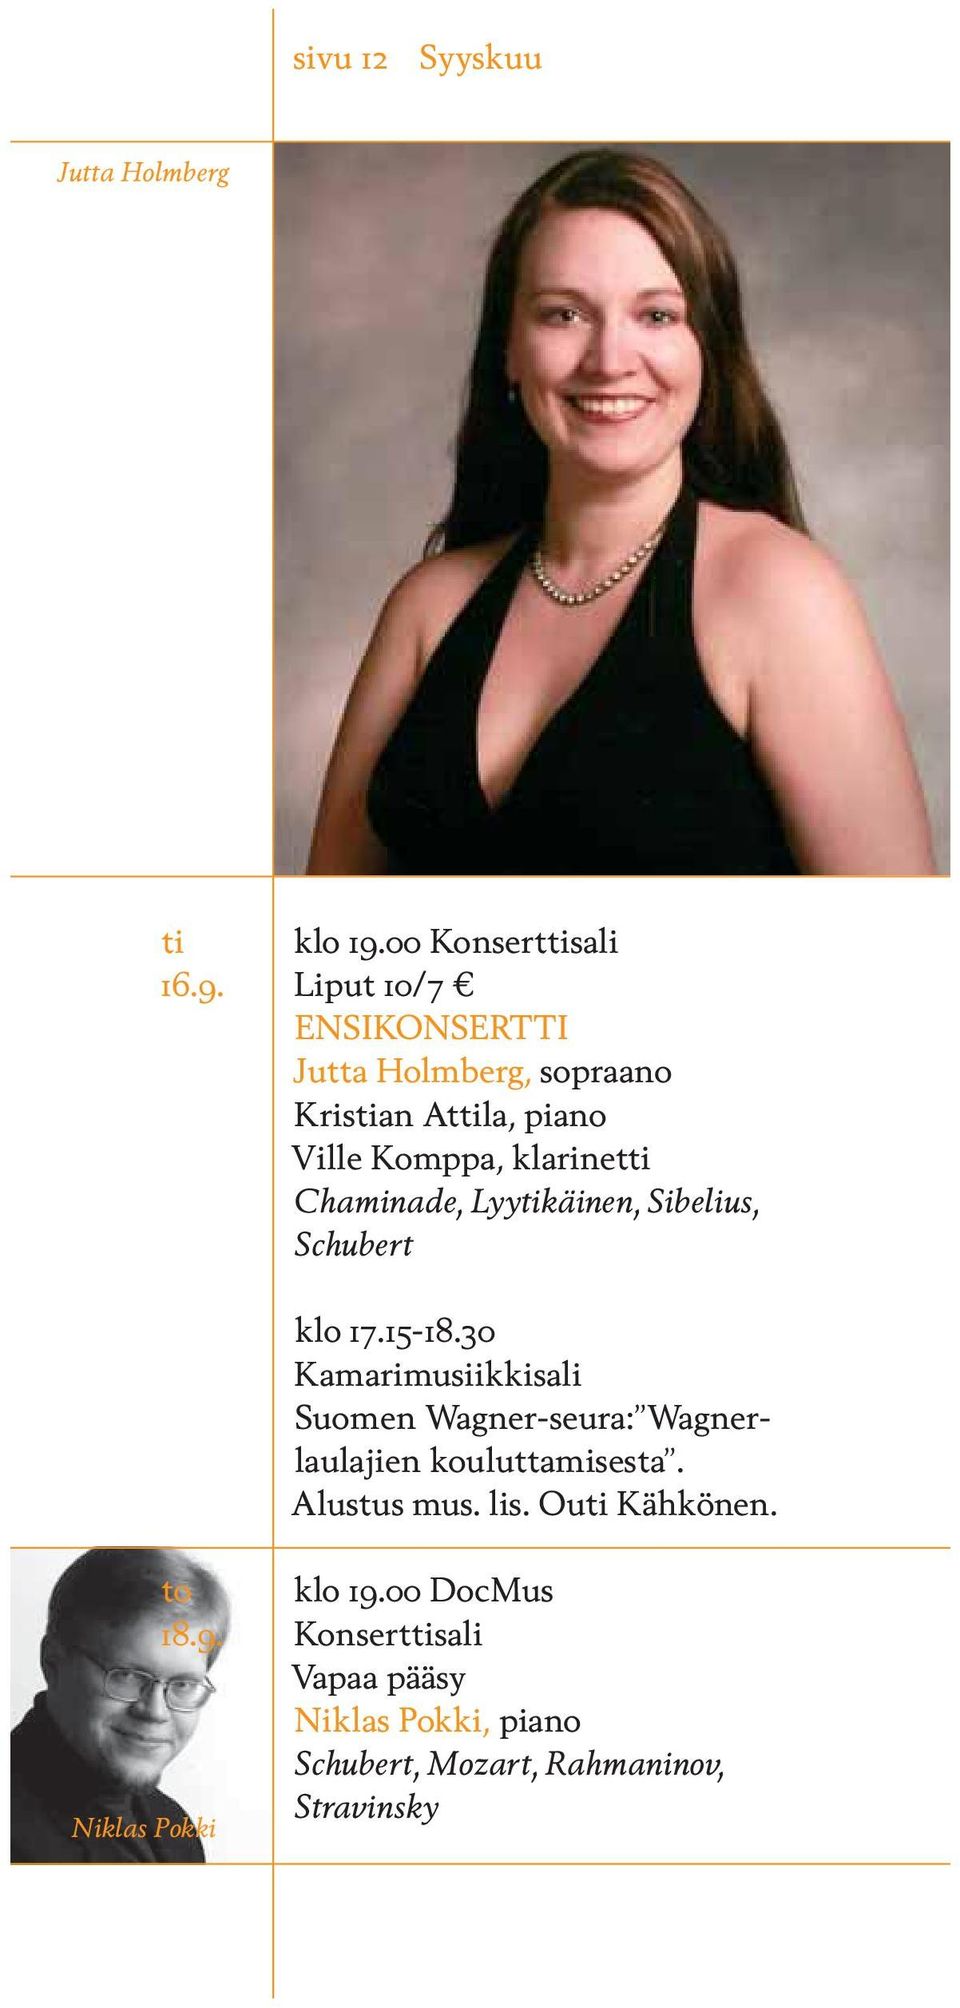 Liput 10/7 ENSIKONSERTTI Jutta Holmberg, sopraano Kristian Attila, piano Ville Komppa, klarinetti Chaminade,